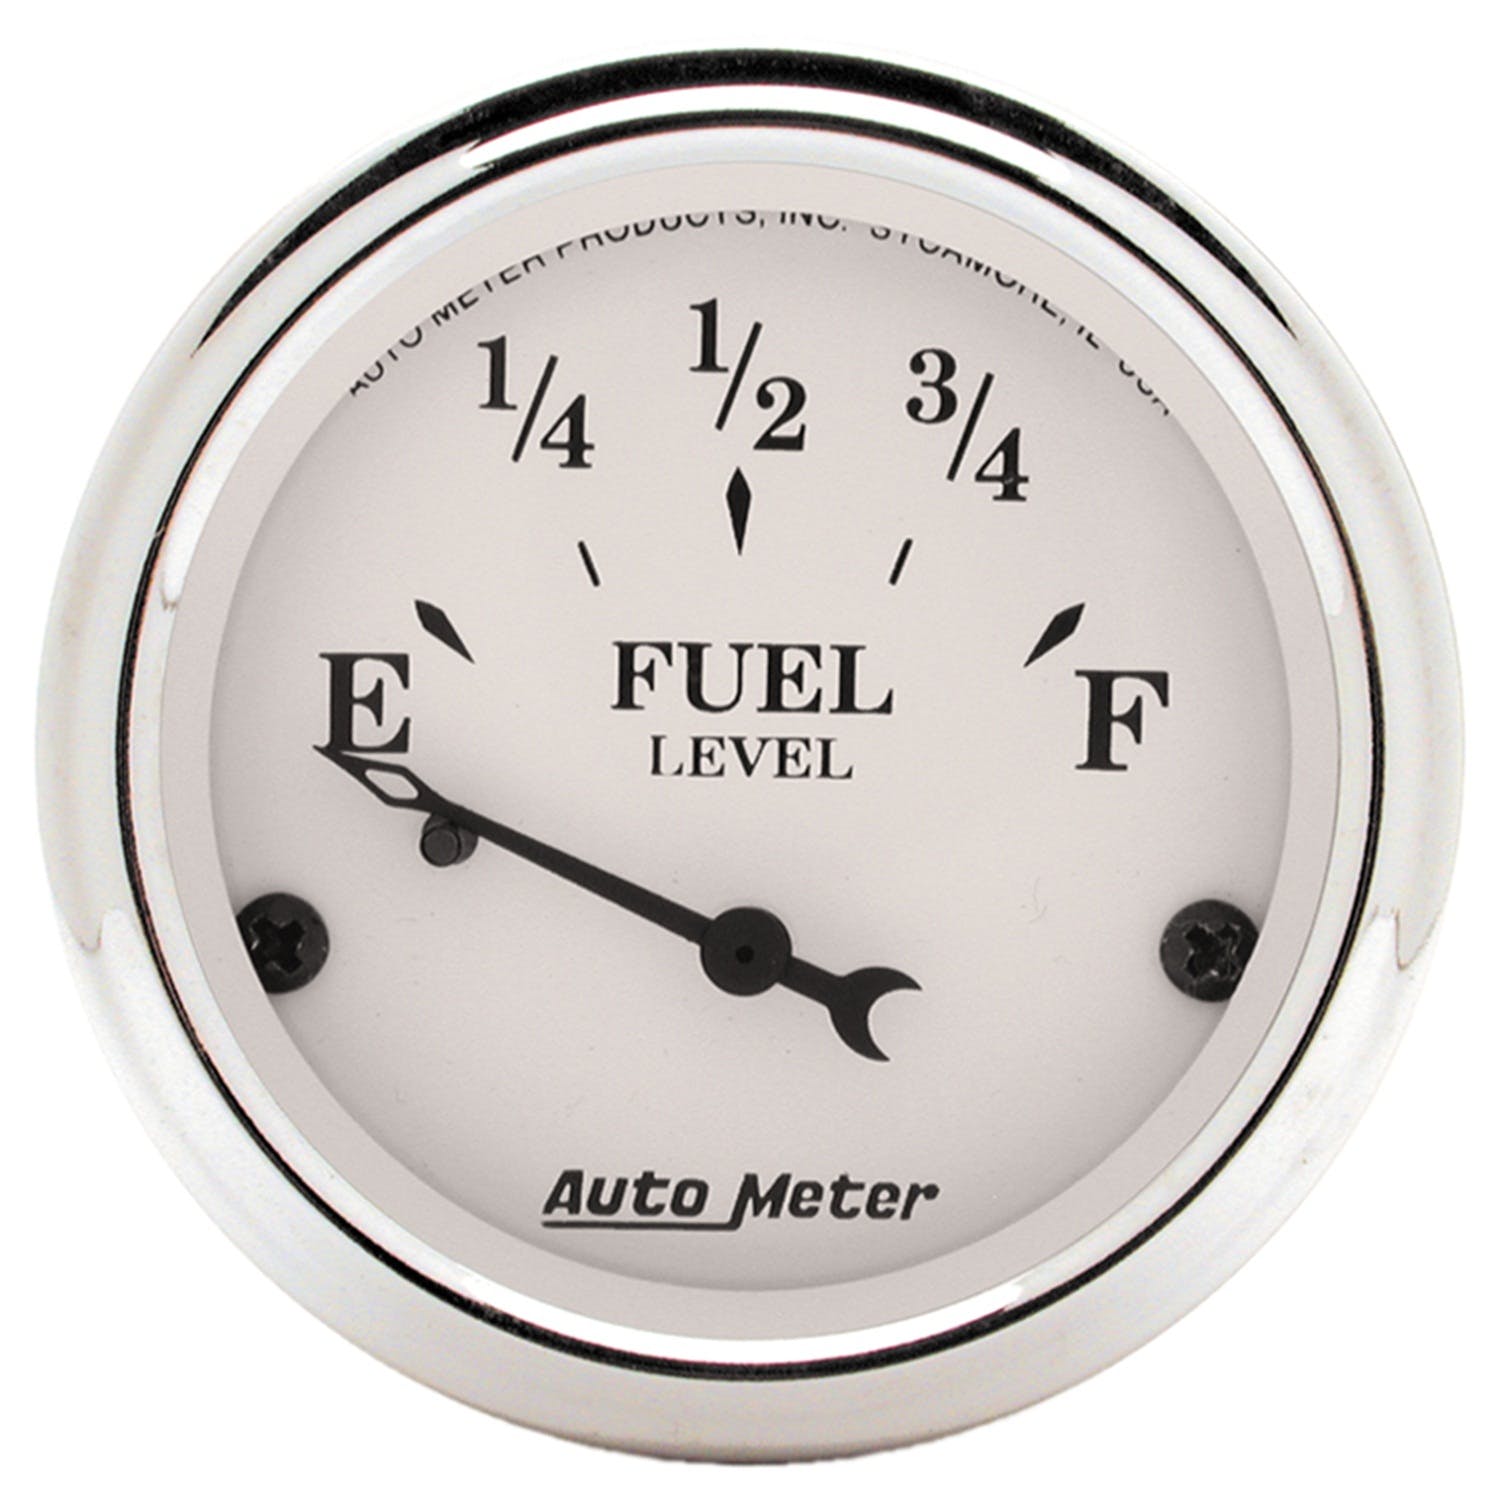 AutoMeter Products 1604 Fuel Level Gauge 0 E/90 F